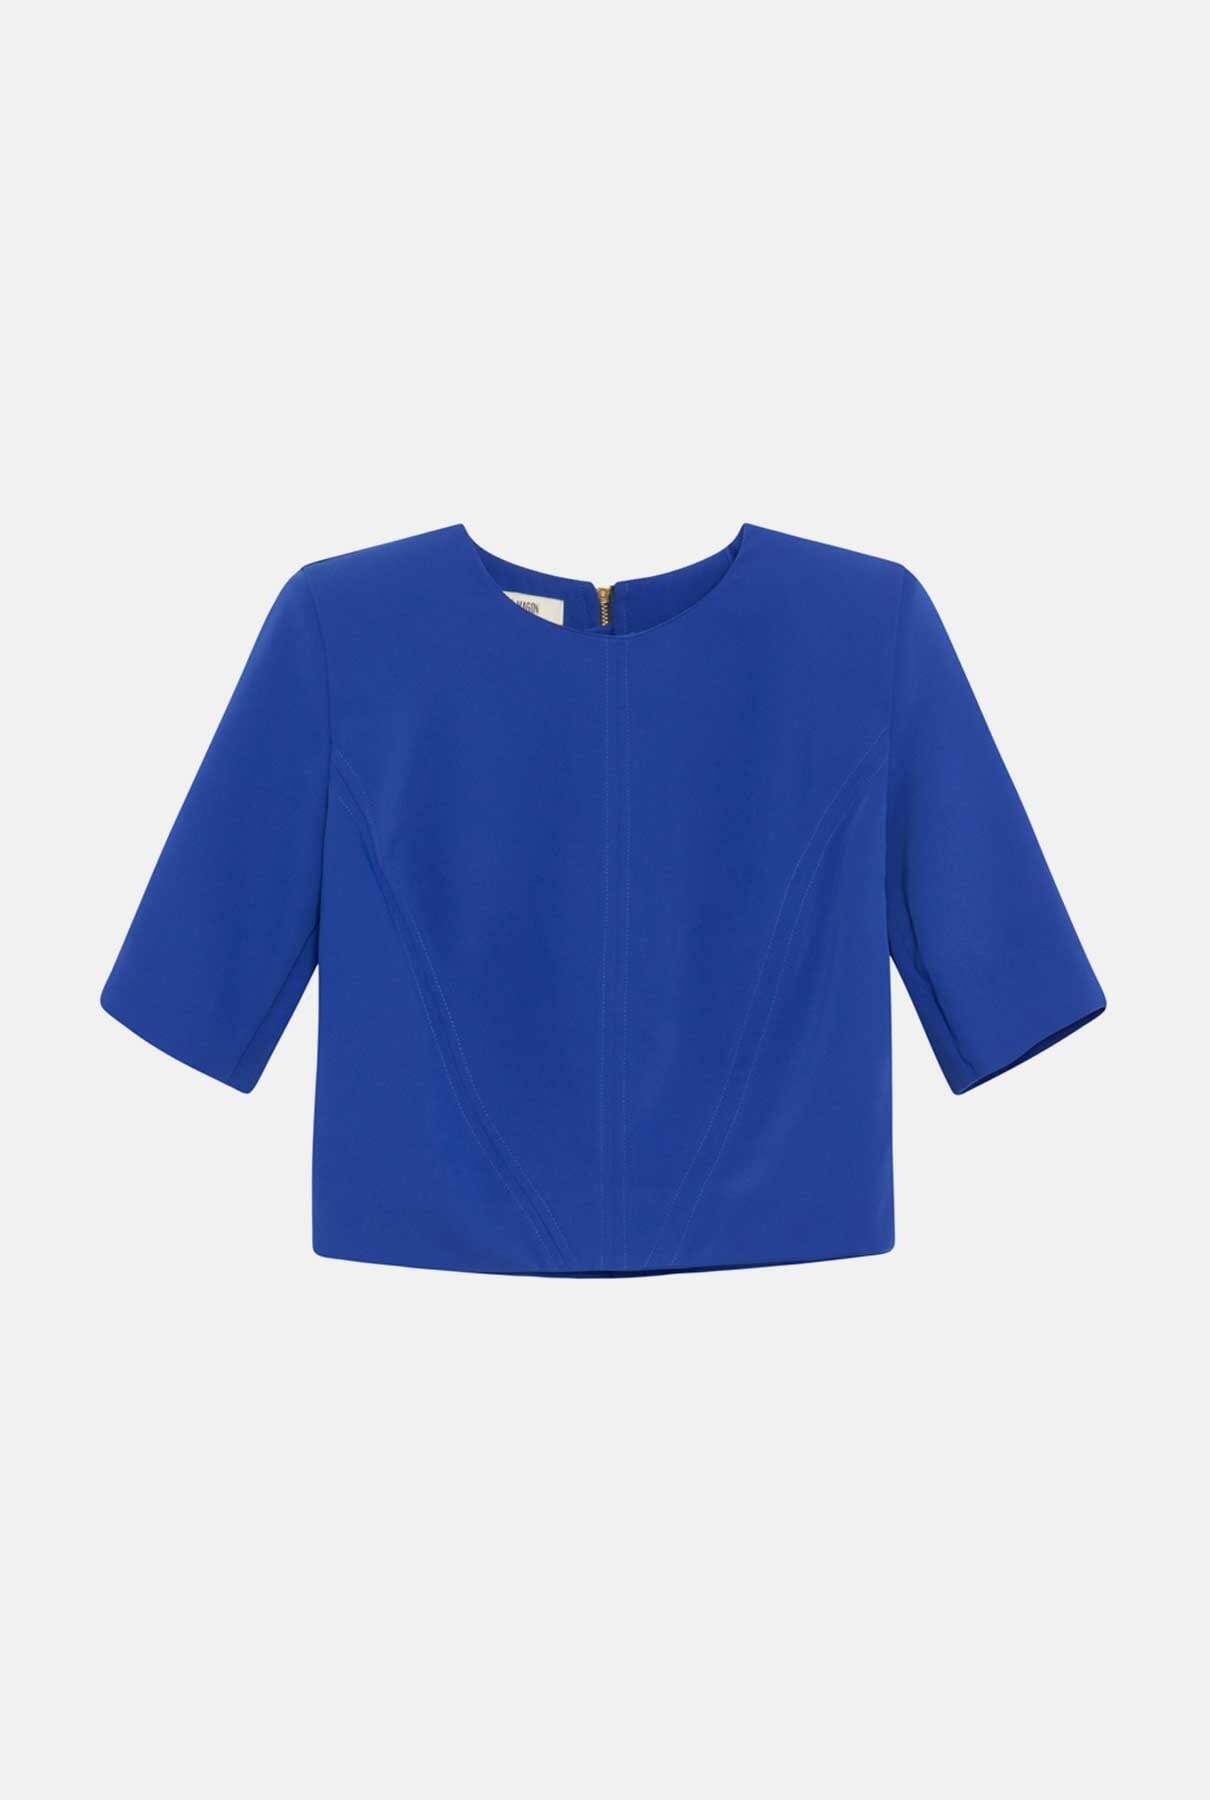 Carmen Blue T-Shirts & tops Julise Magon 